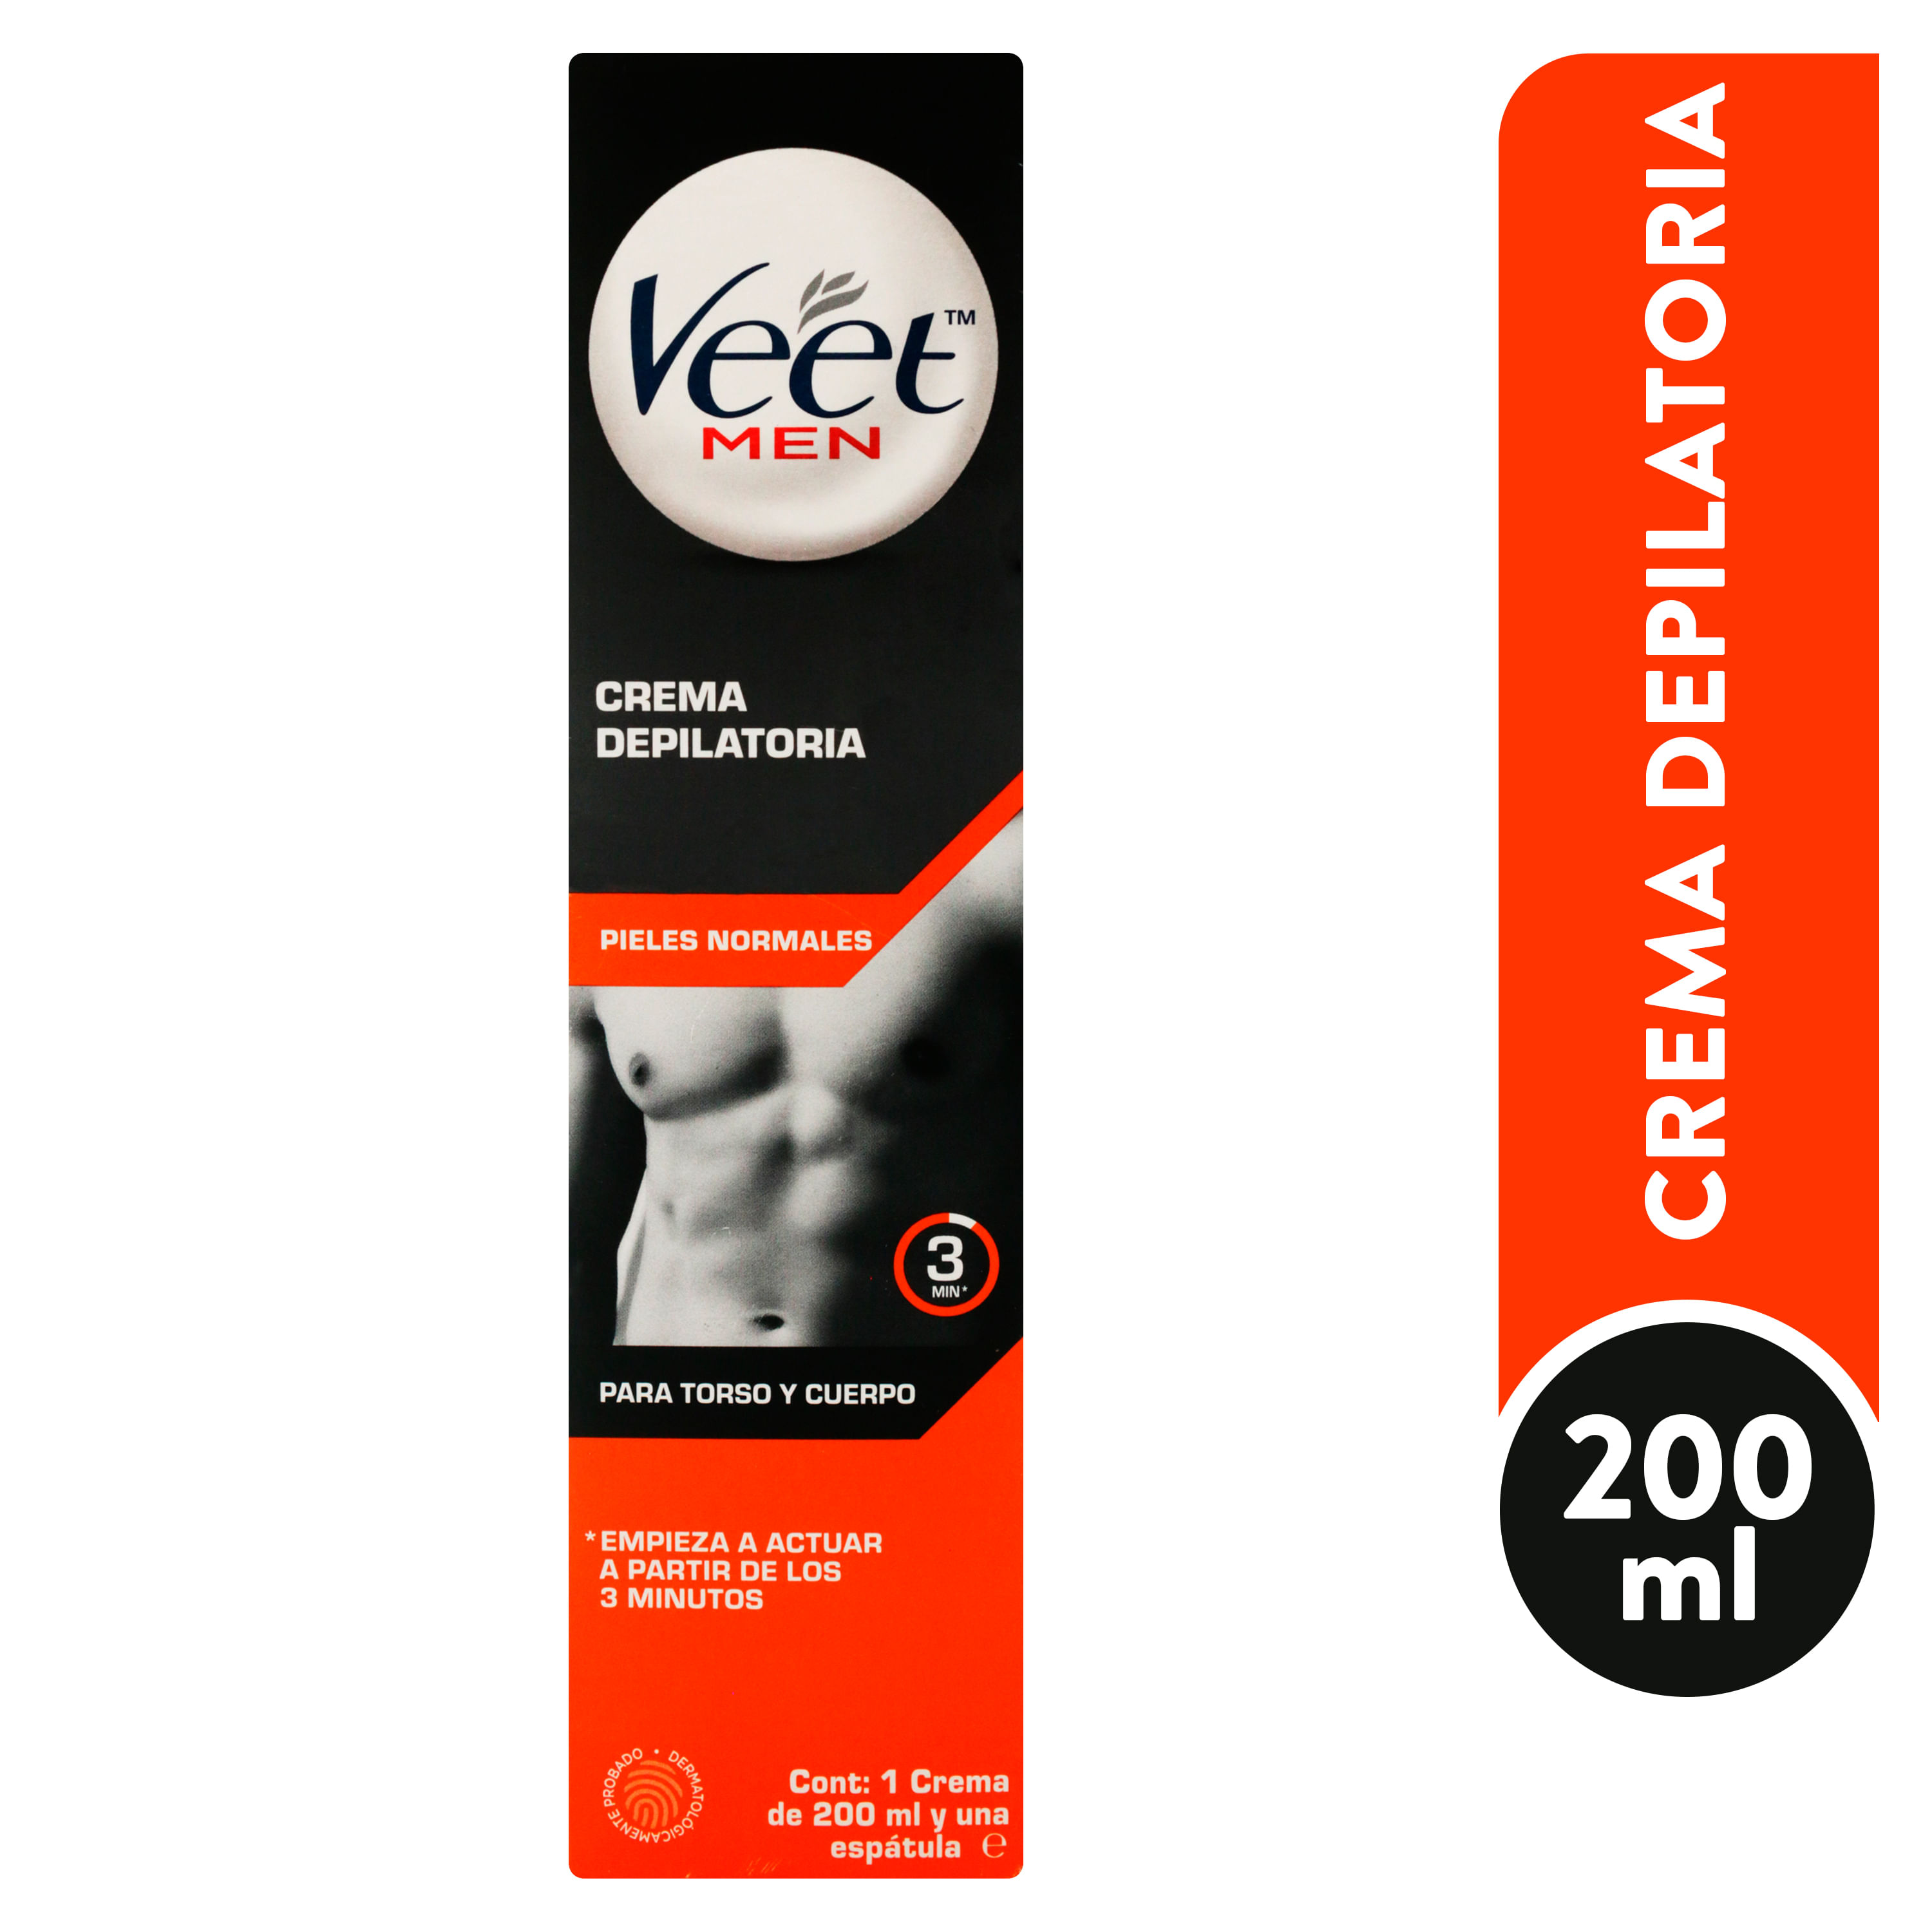 VEET - For men. Crema depilatoria para hombres on Vimeo